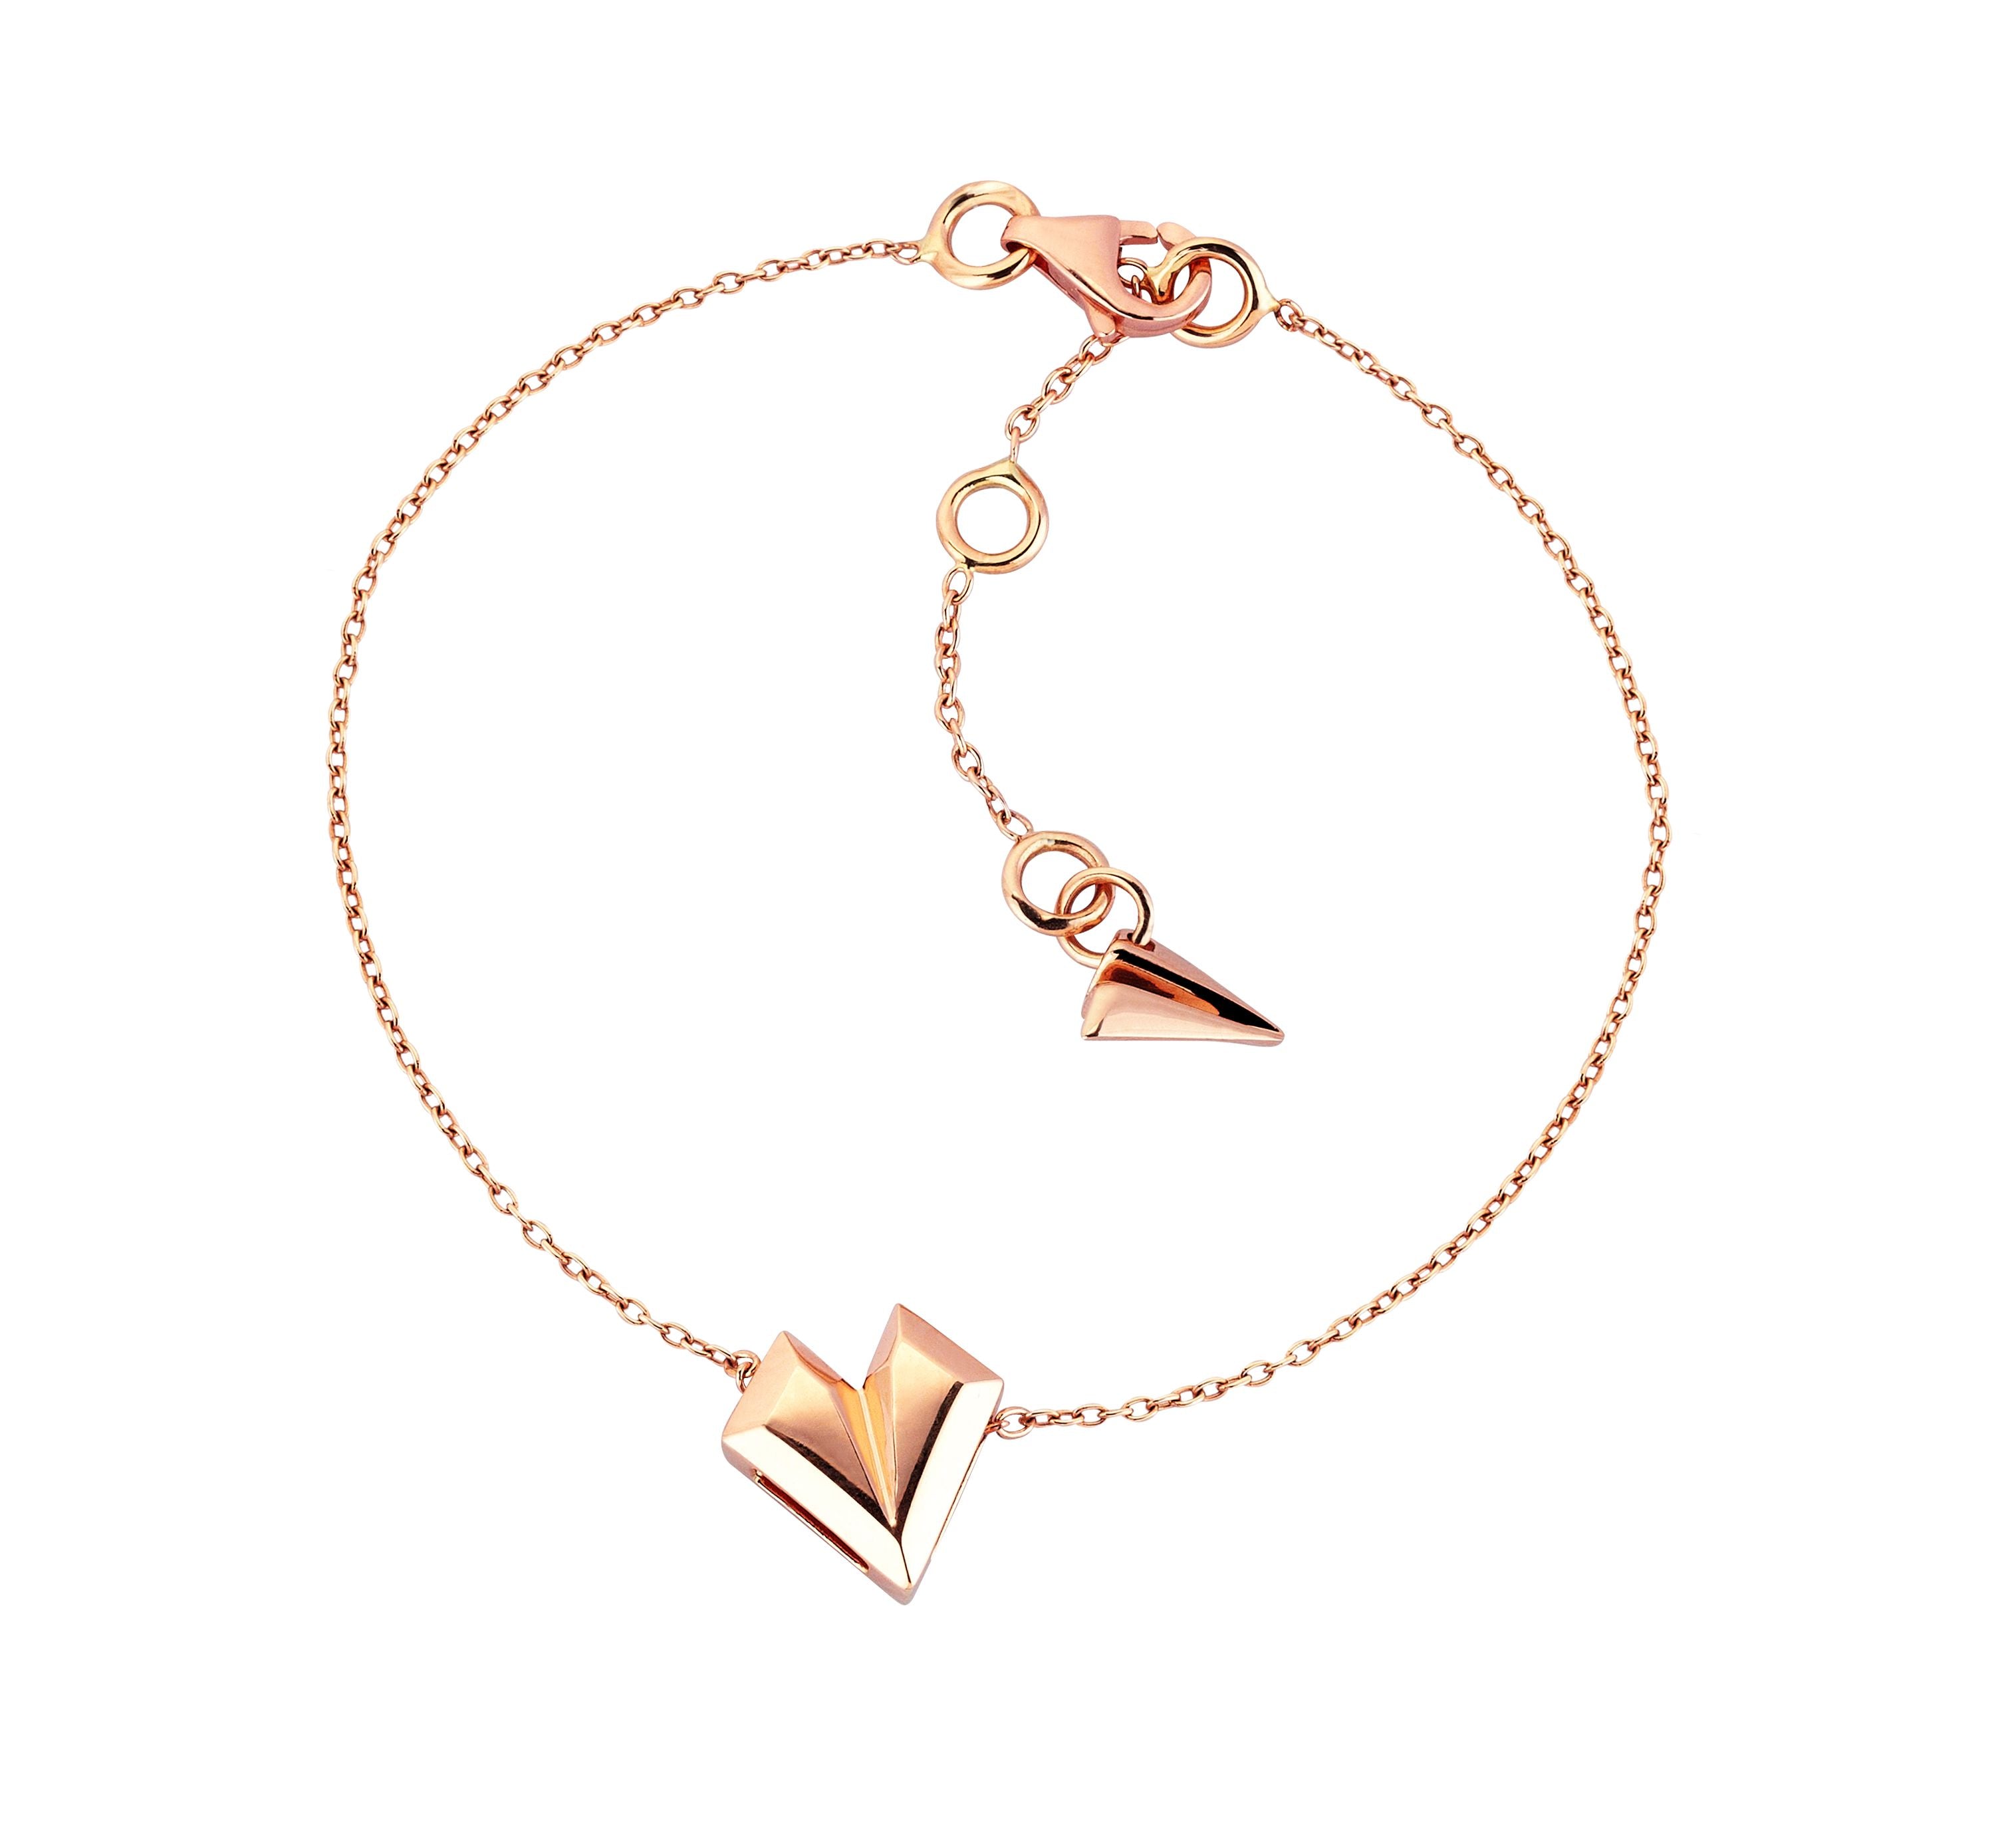 Origami Love Bracelet in Rose Gold - Her Story Shop